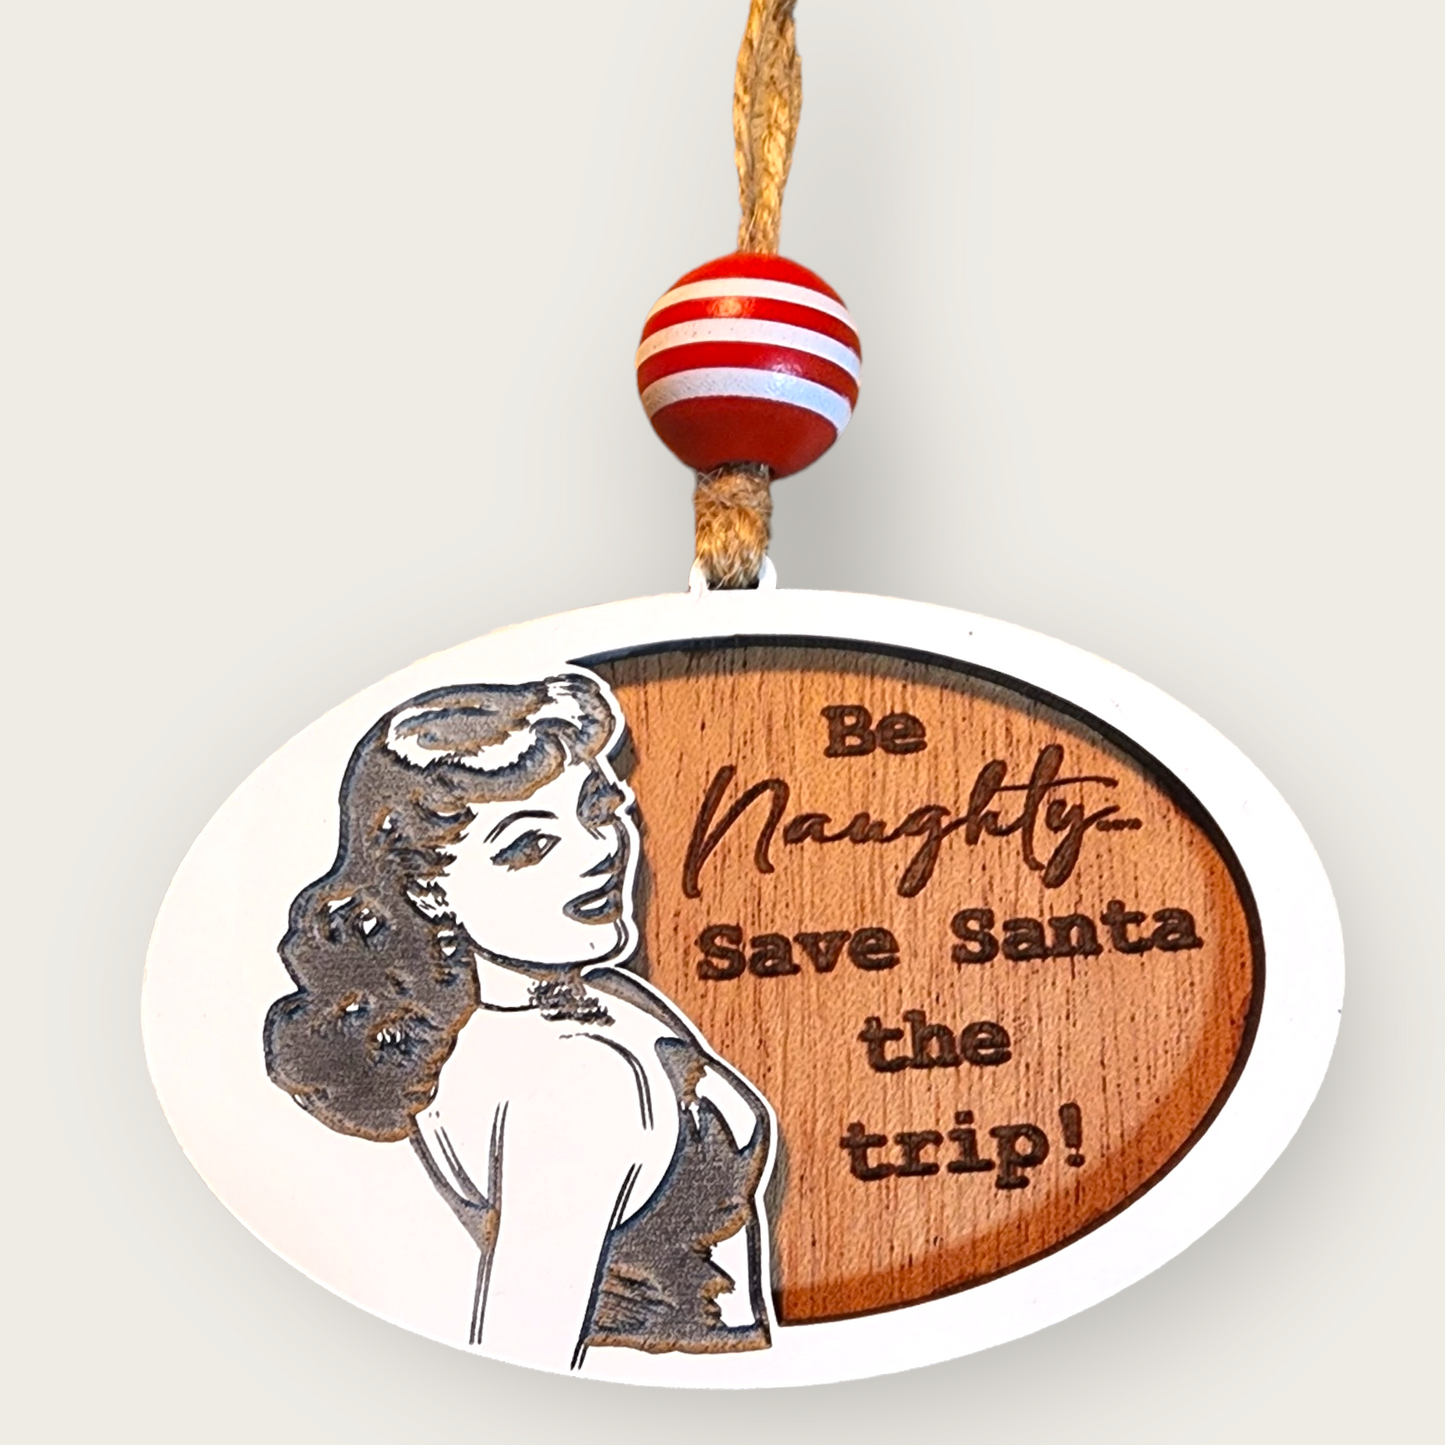 Save Santa a trip ornament